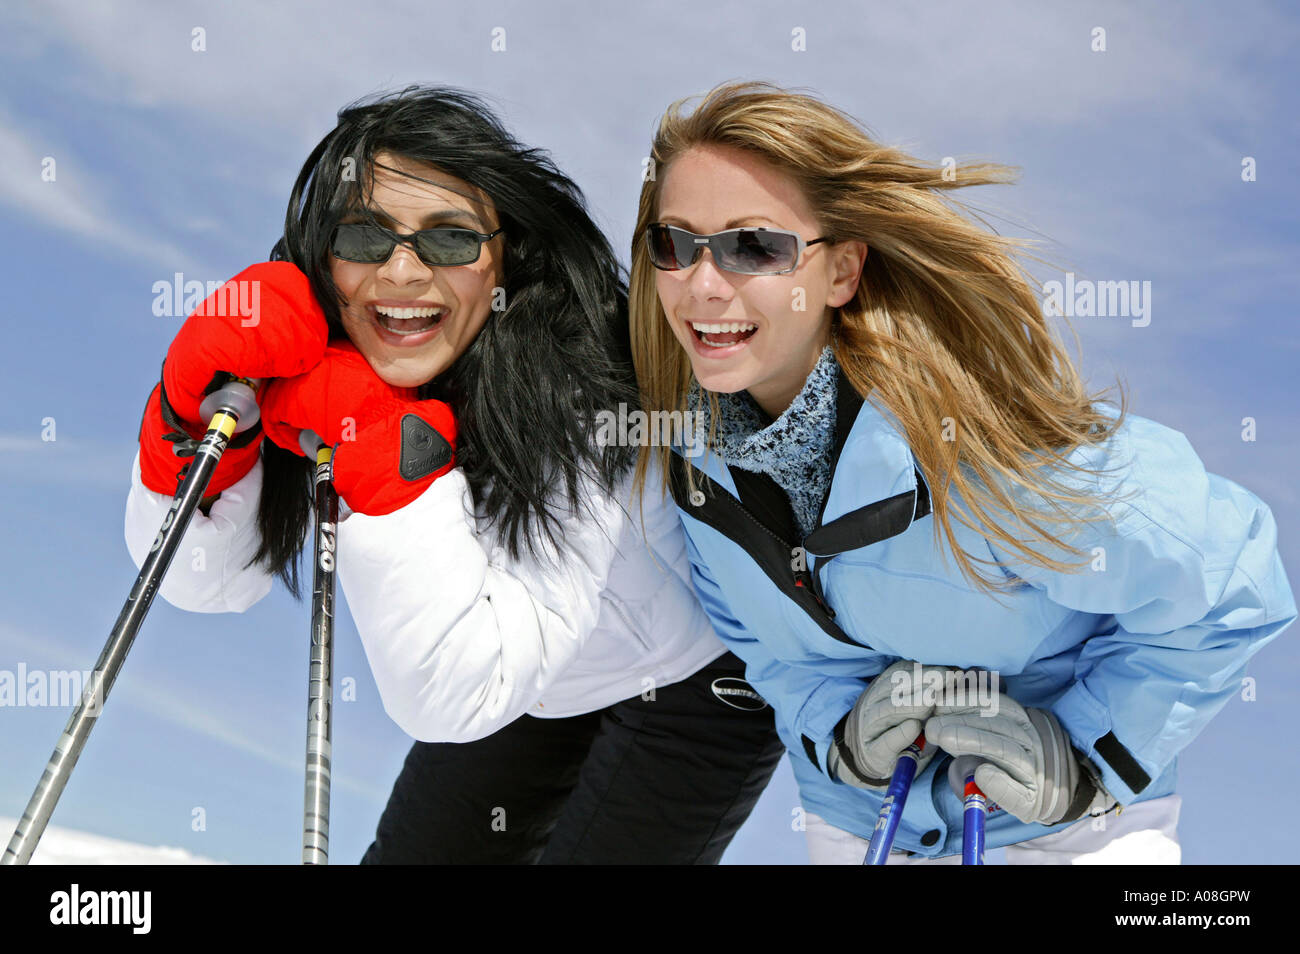 Zwei Frauen Freundinnen im Skiurlaub, Young Women Skiing Winter Holiday Stock Photo